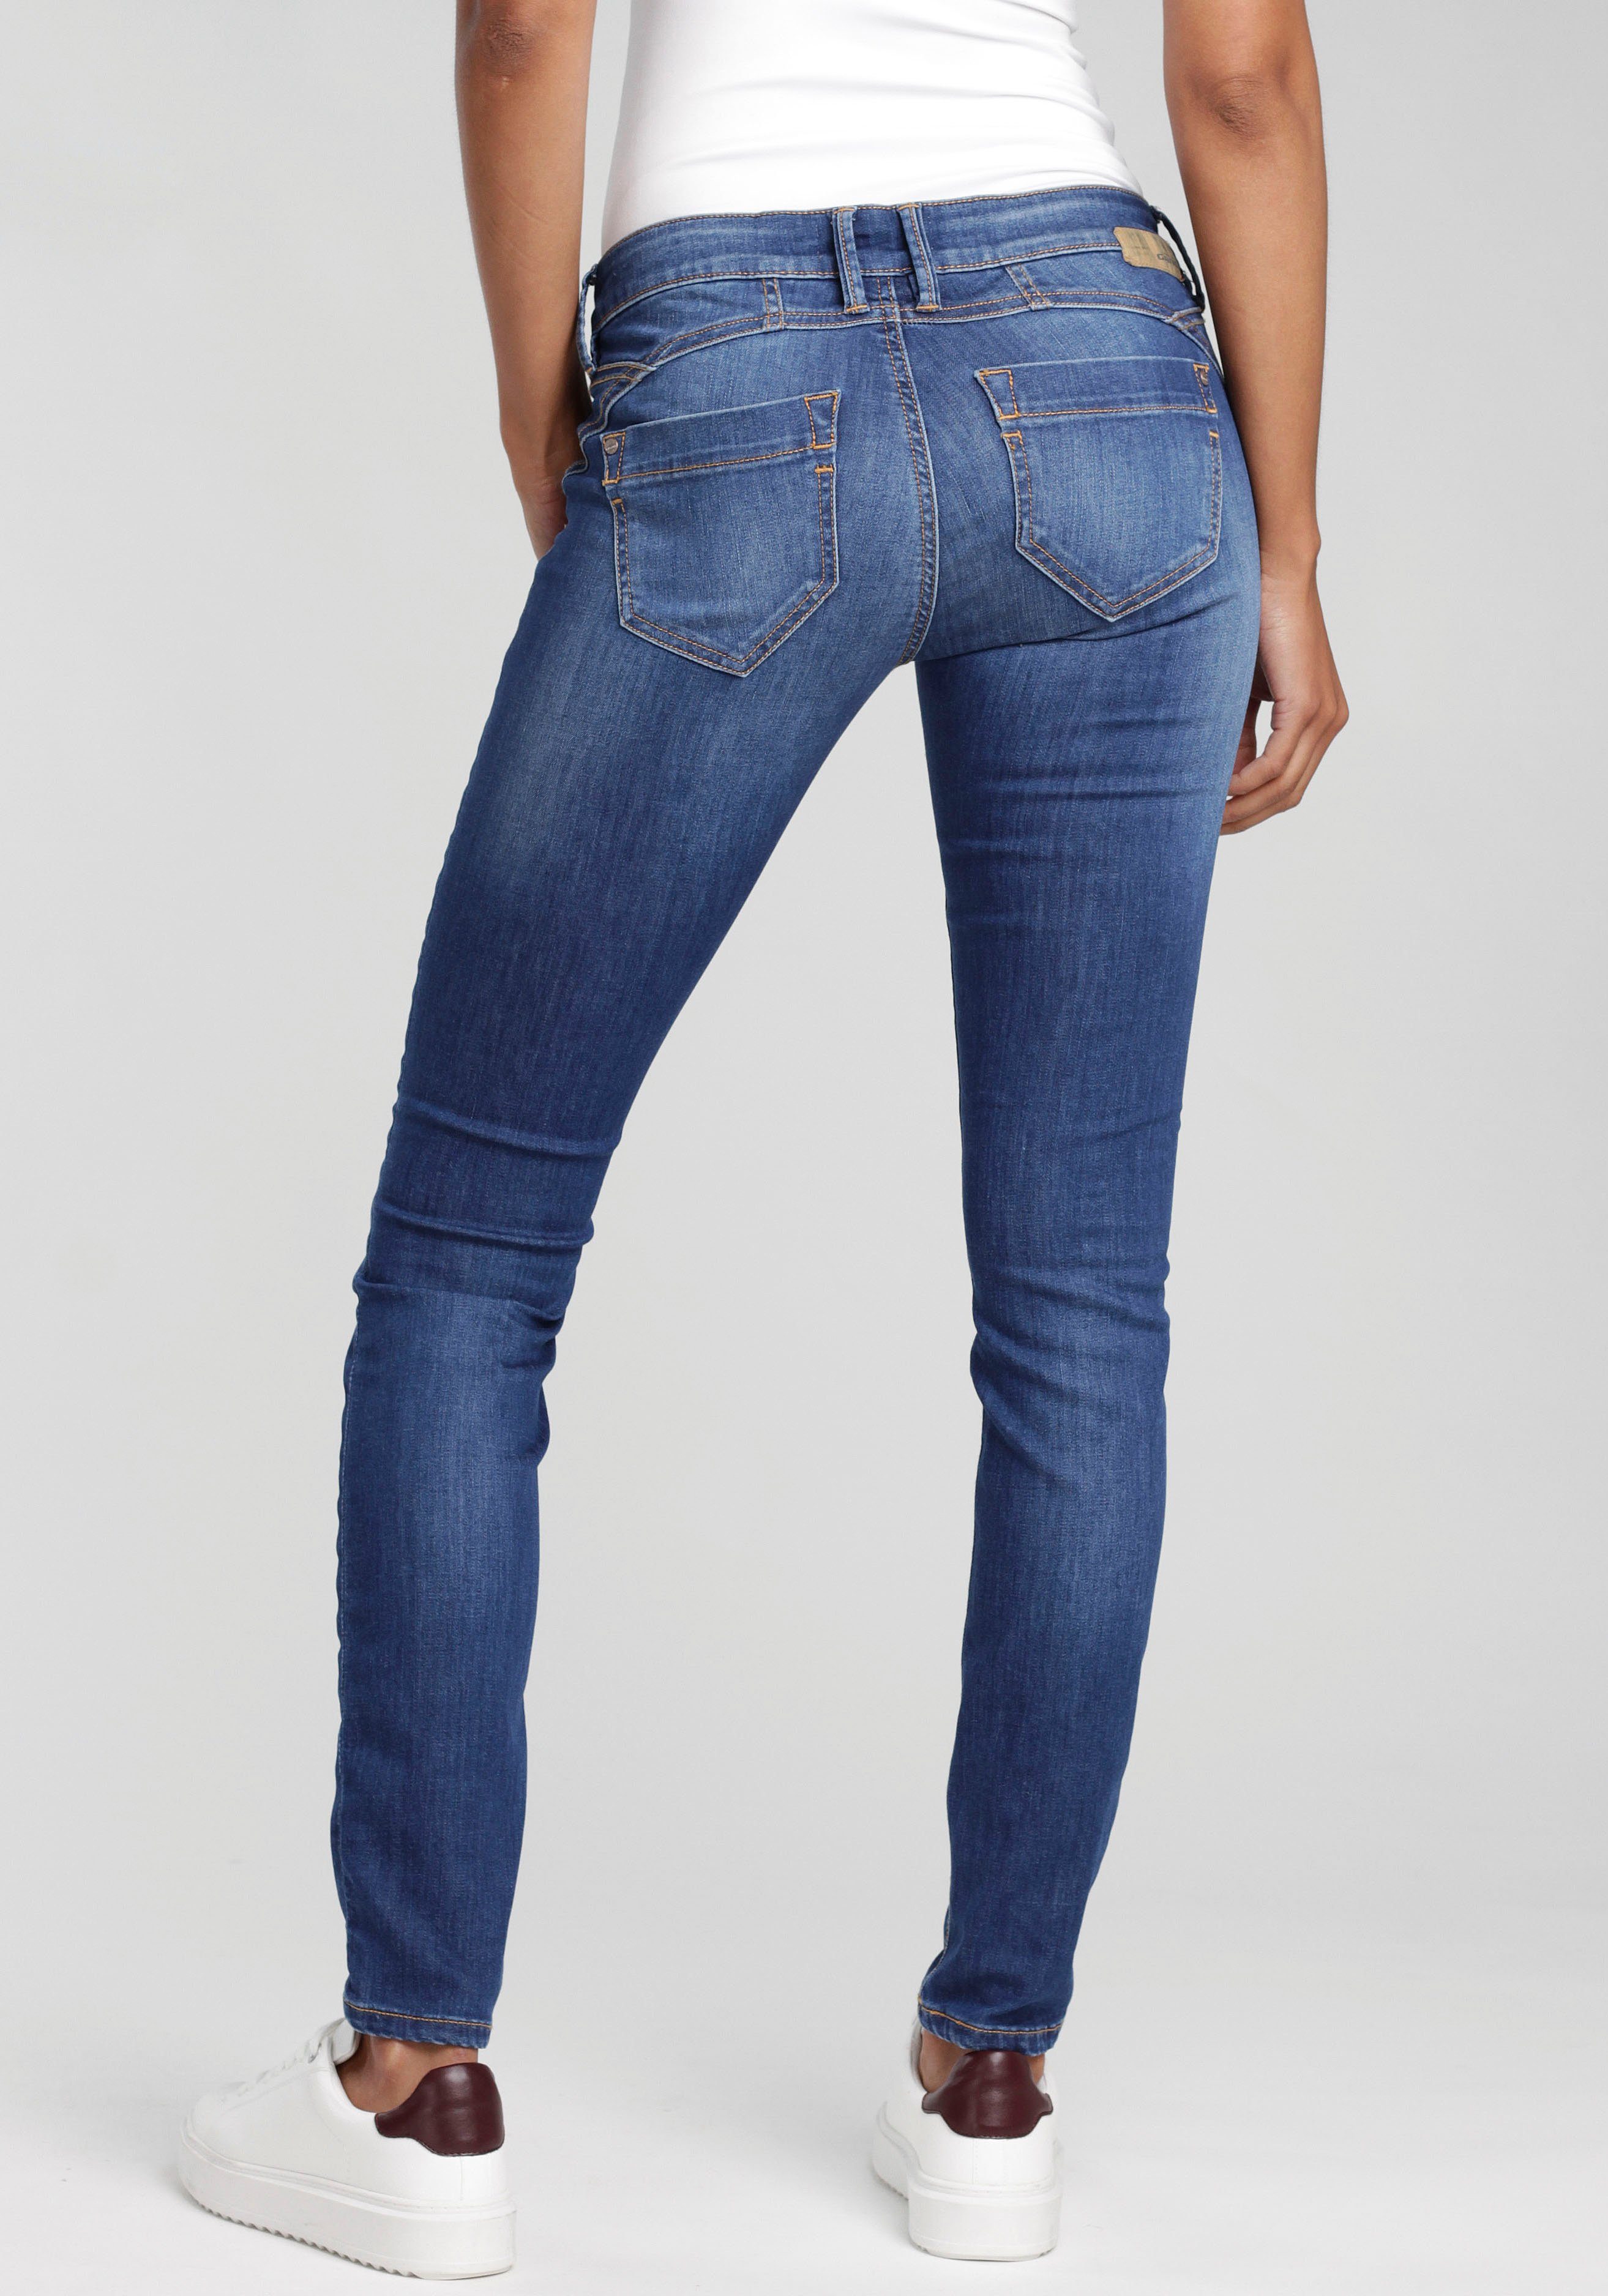 GANG Skinny-fit-Jeans »Nena« mit coolen Used-Effekten online kaufen | OTTO